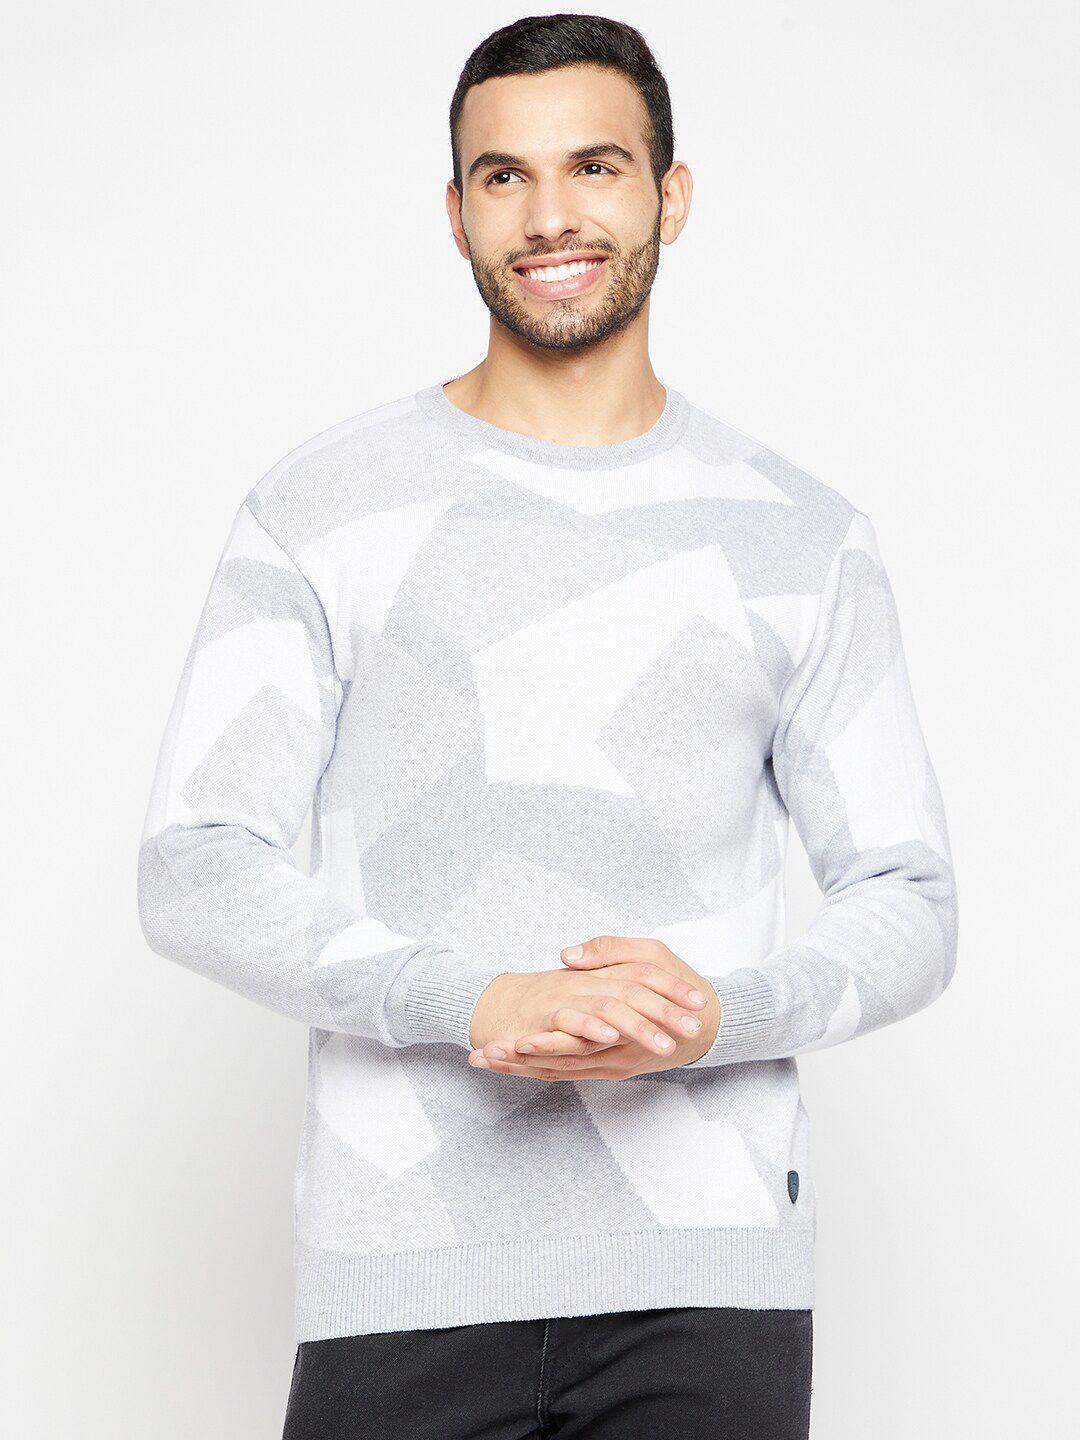 duke-men-grey-&-white-geometric-printed-pullover